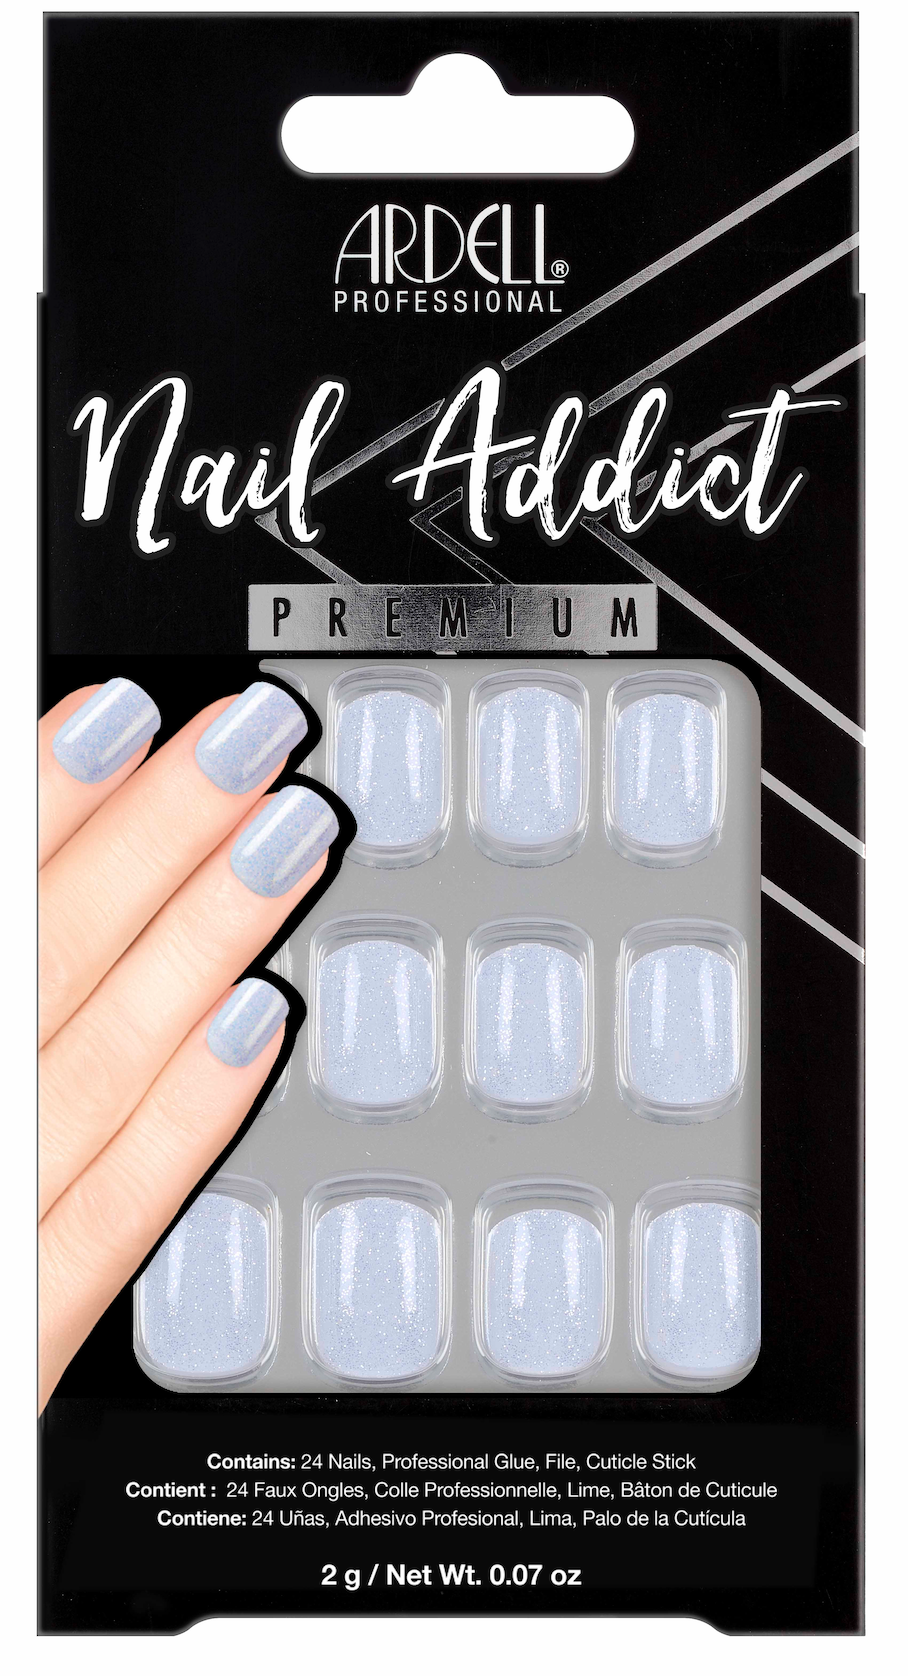 Ardell Nail Addict Premium Nails Crystal Glitter